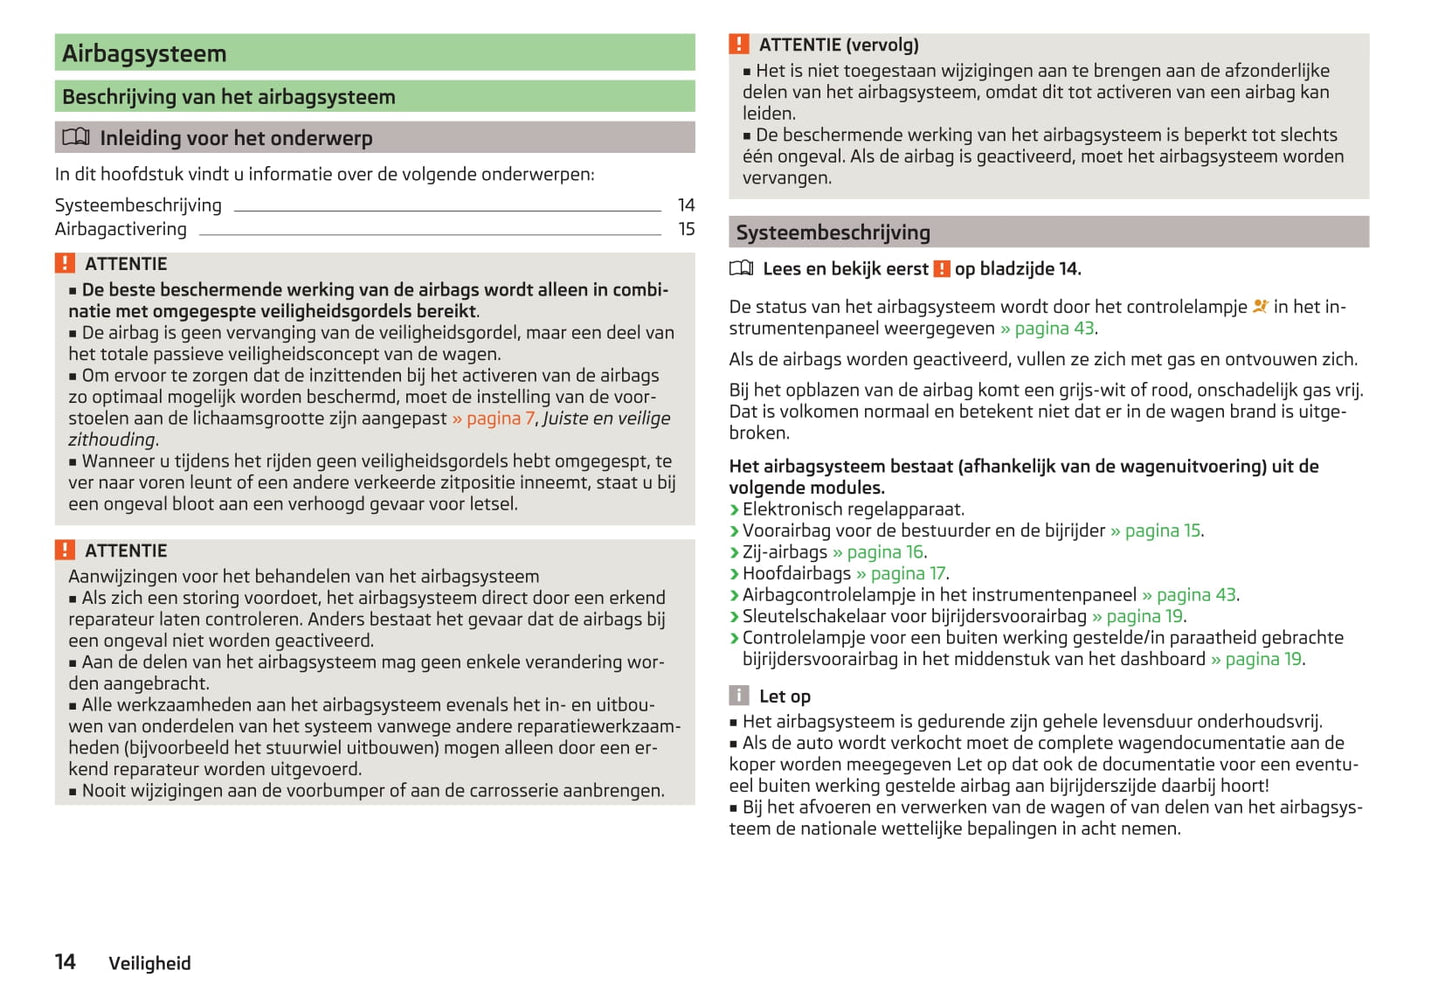 2014-2015 Skoda Fabia Owner's Manual | Dutch